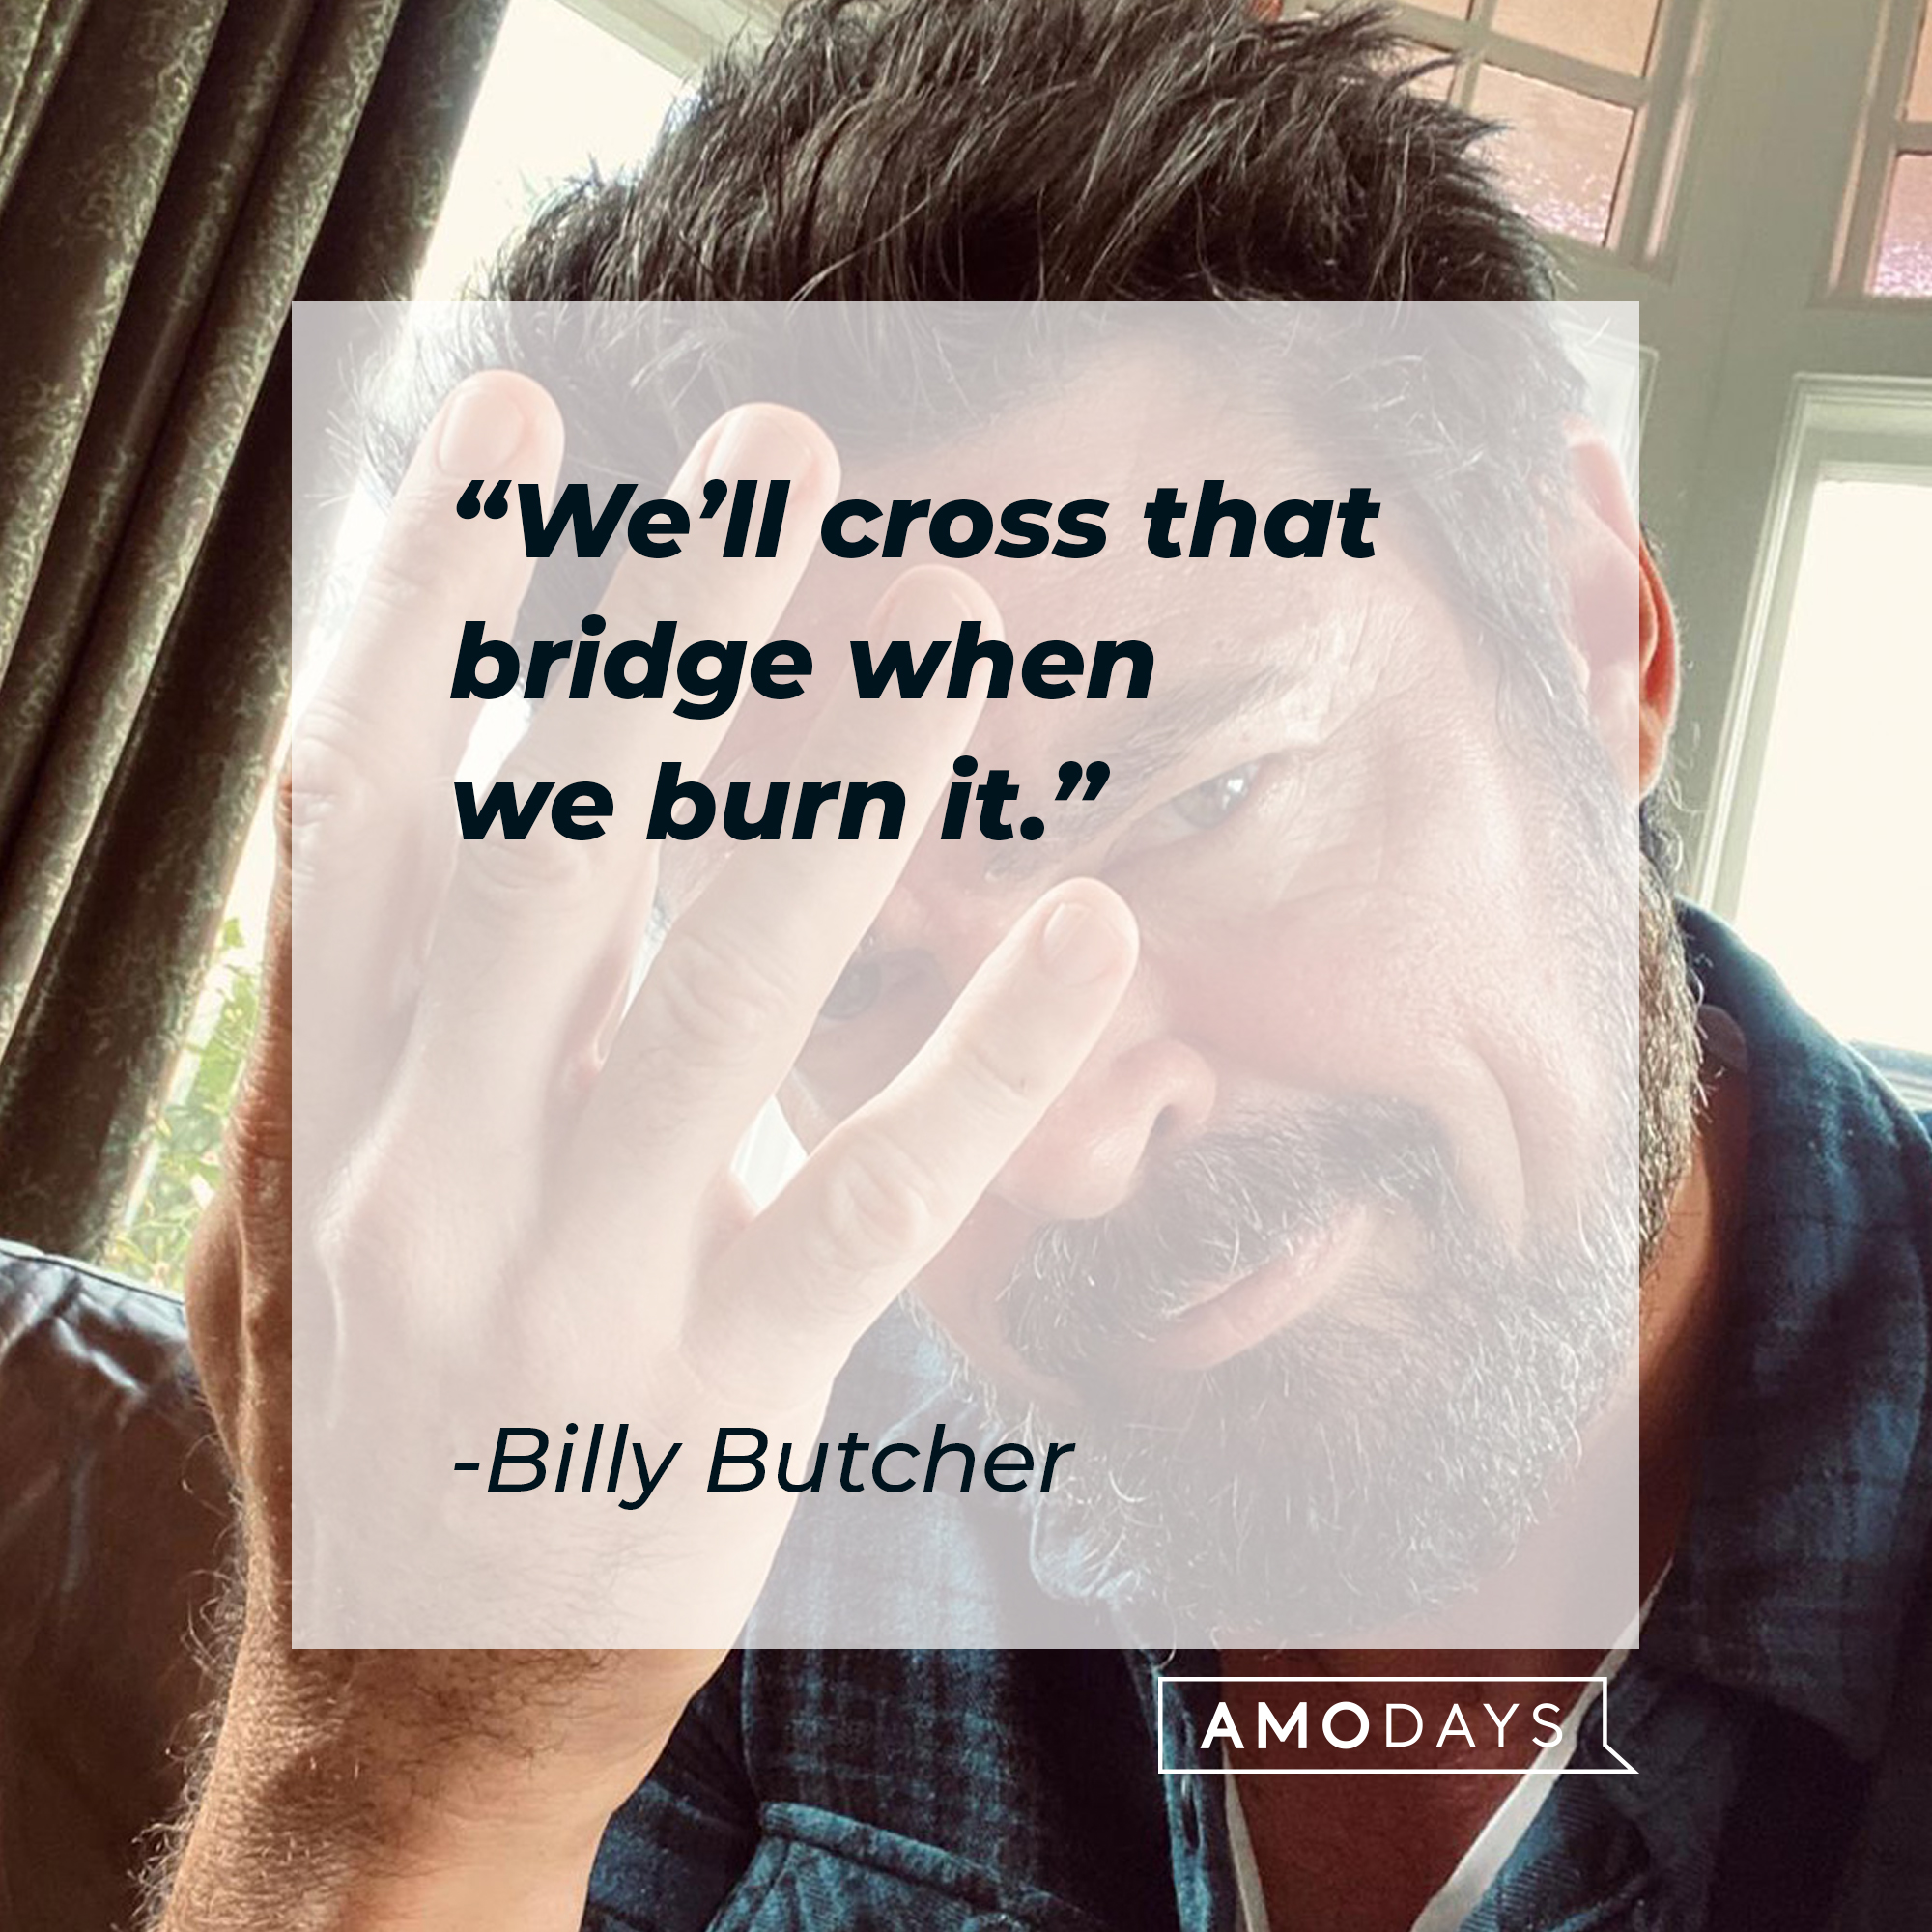 Billy Butcher's quote: "We'll cross that bridge when we burn it." | Source: Facebook.com/TheBoysTV